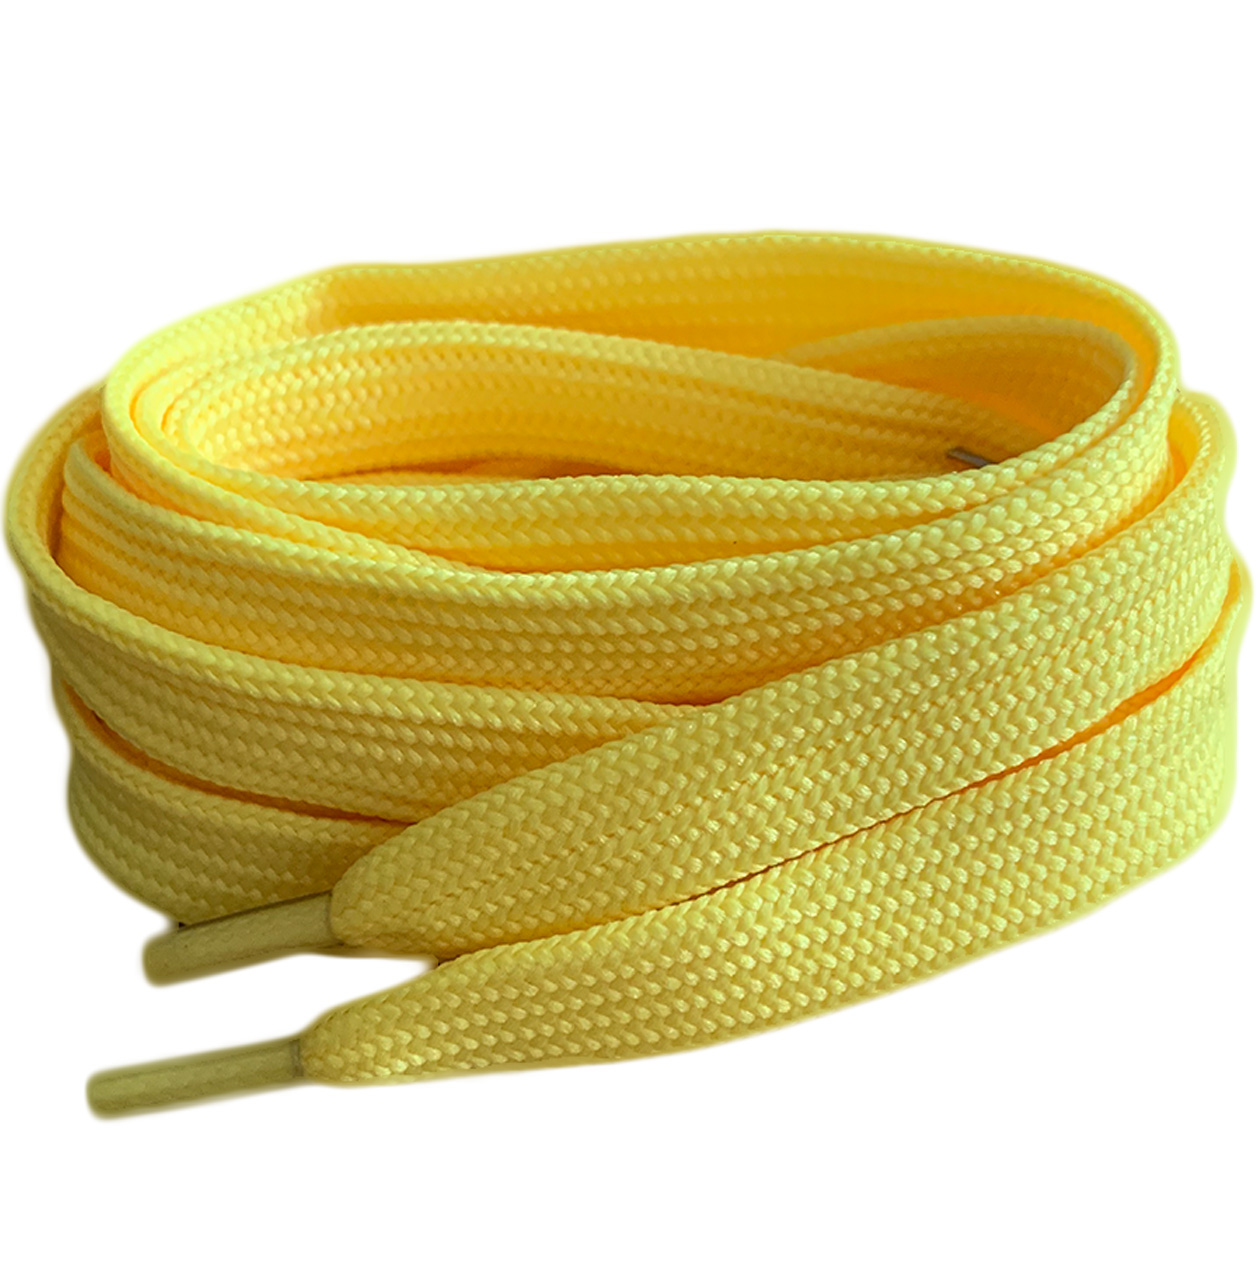 yellow-flat-shoelaces-2-copy-1.jpg